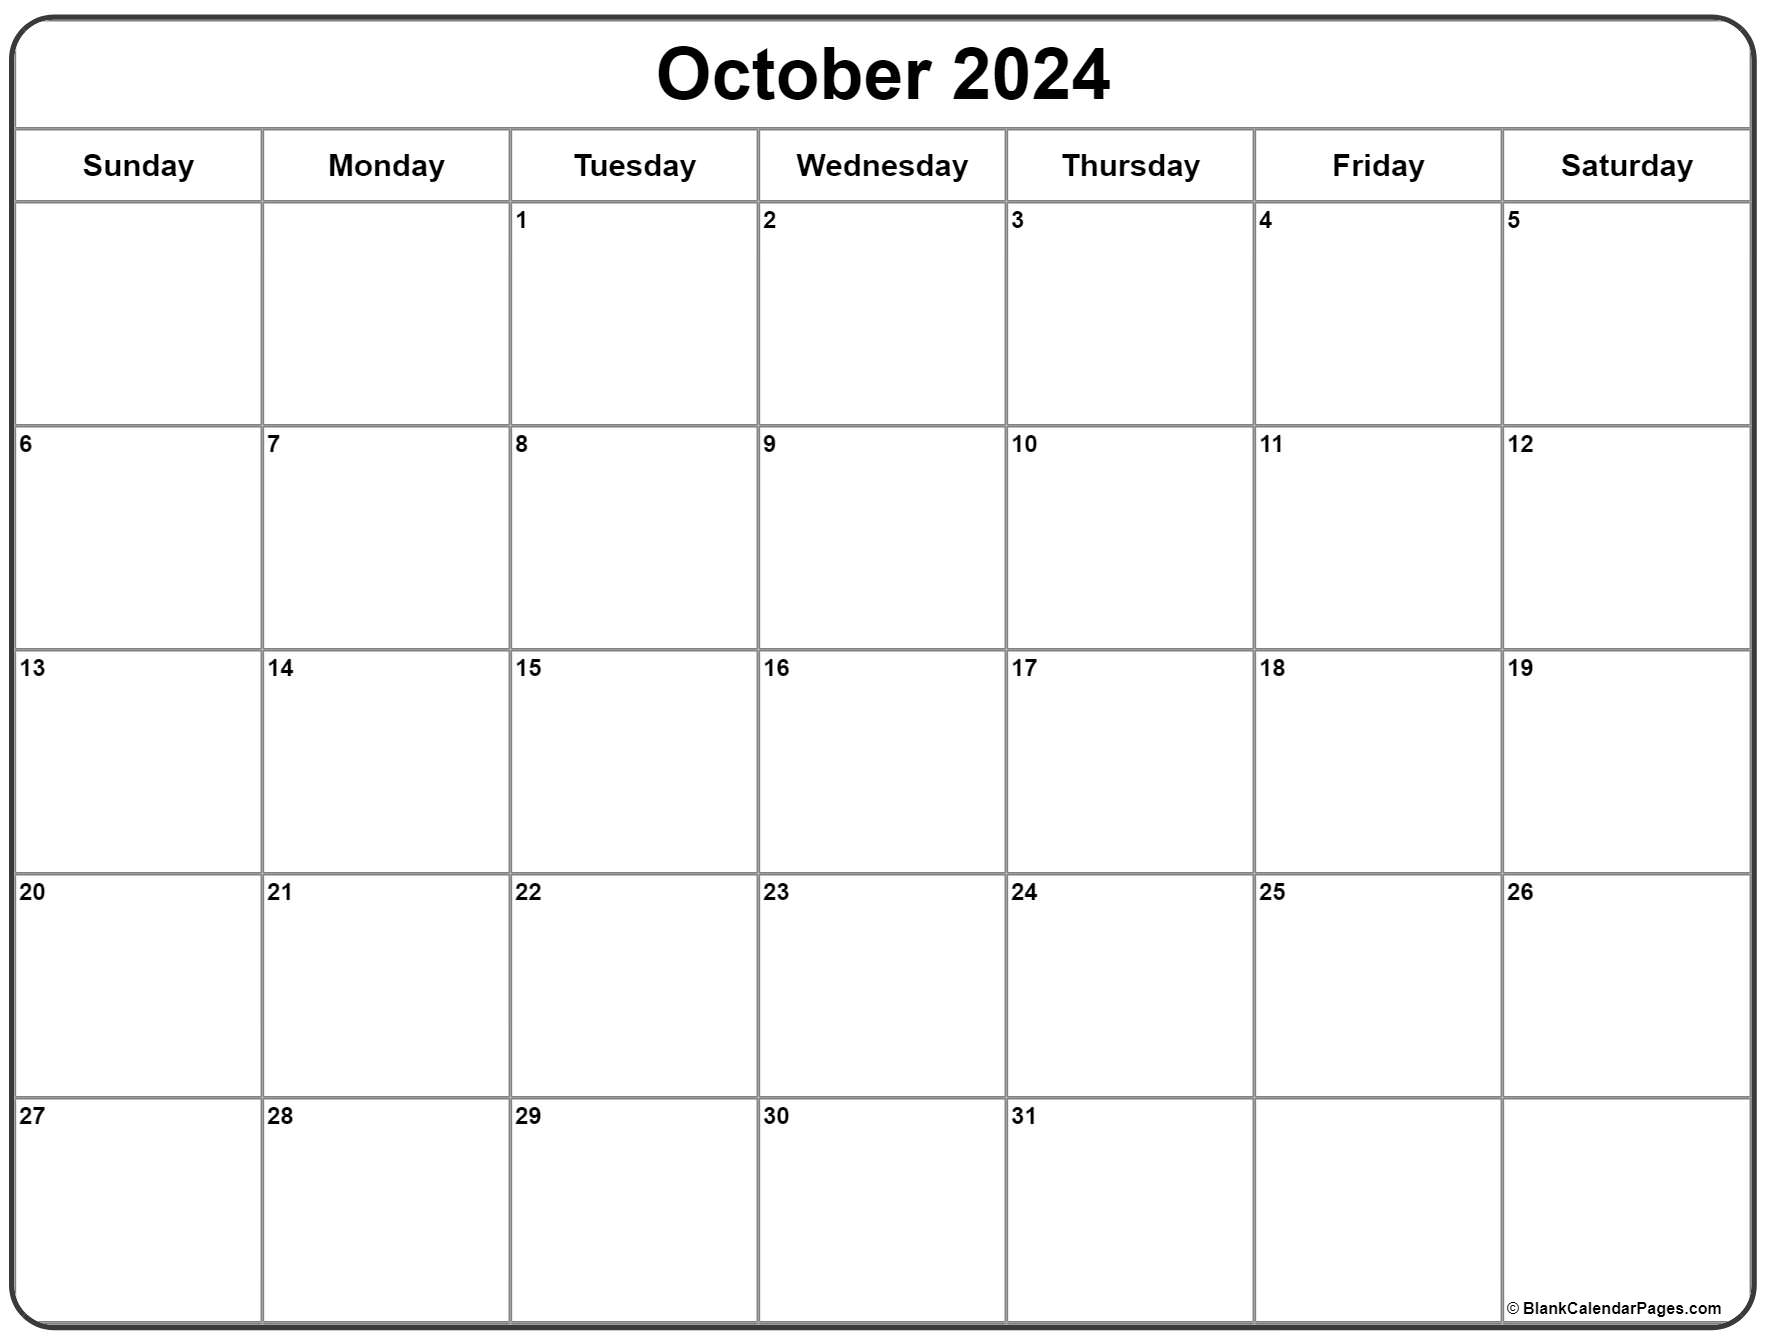 jan-ksu-euro-unt-calendar-october-2022-calendar-printable-free-with-us-holidays-customized